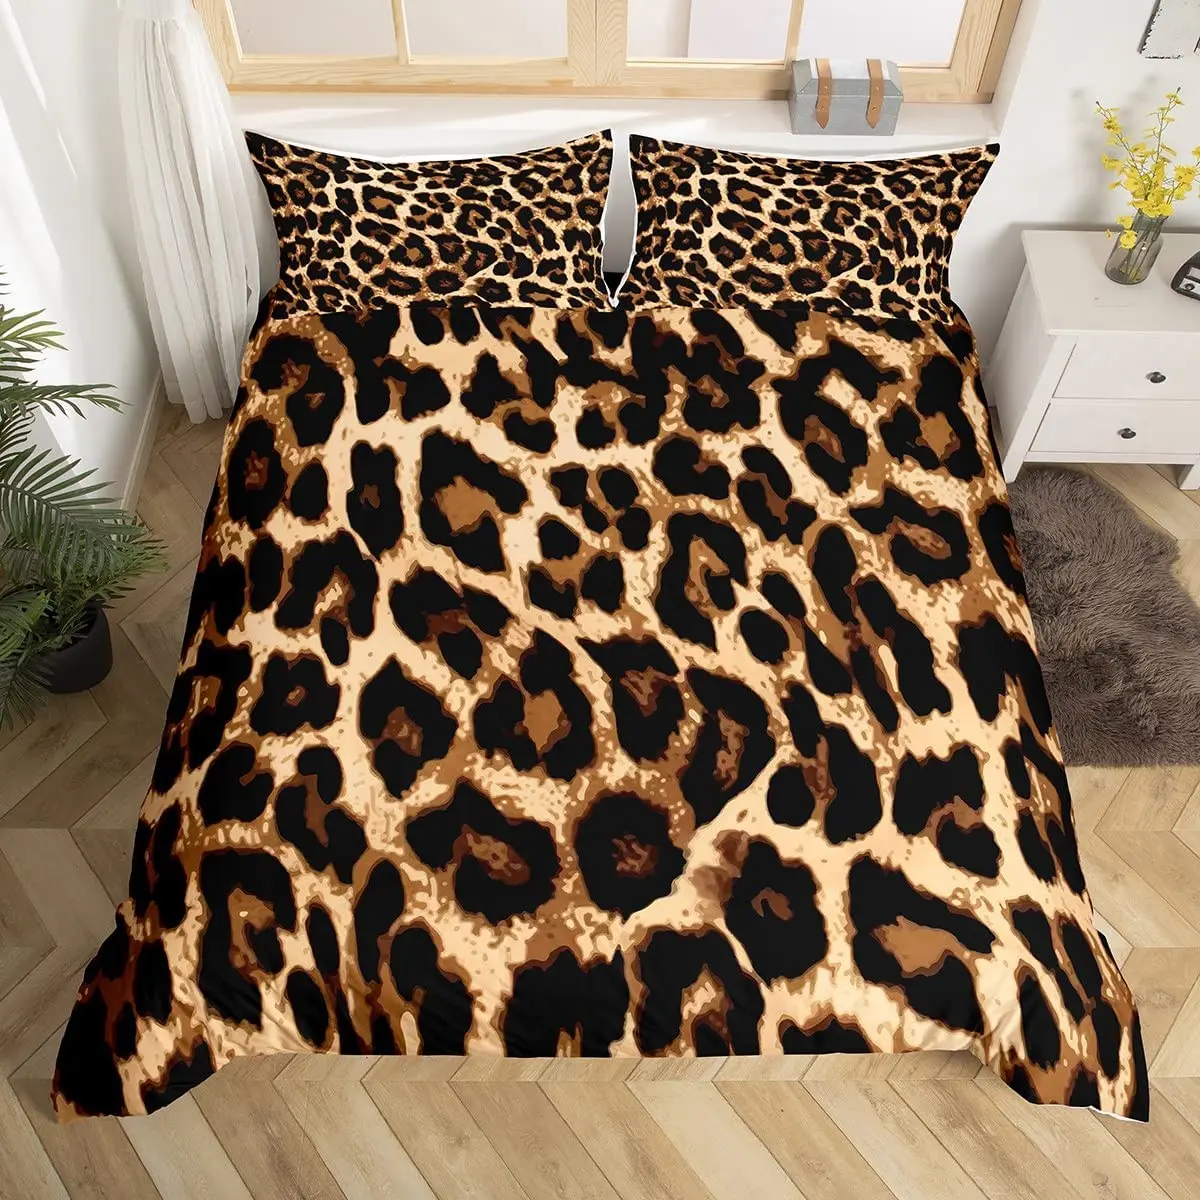 

Leopard Print Duvet Cover 240×220 Bed Black Brown Leopard Bedding Sets Africa Wild Animal Theme Bedspread Cover Comforter Cover